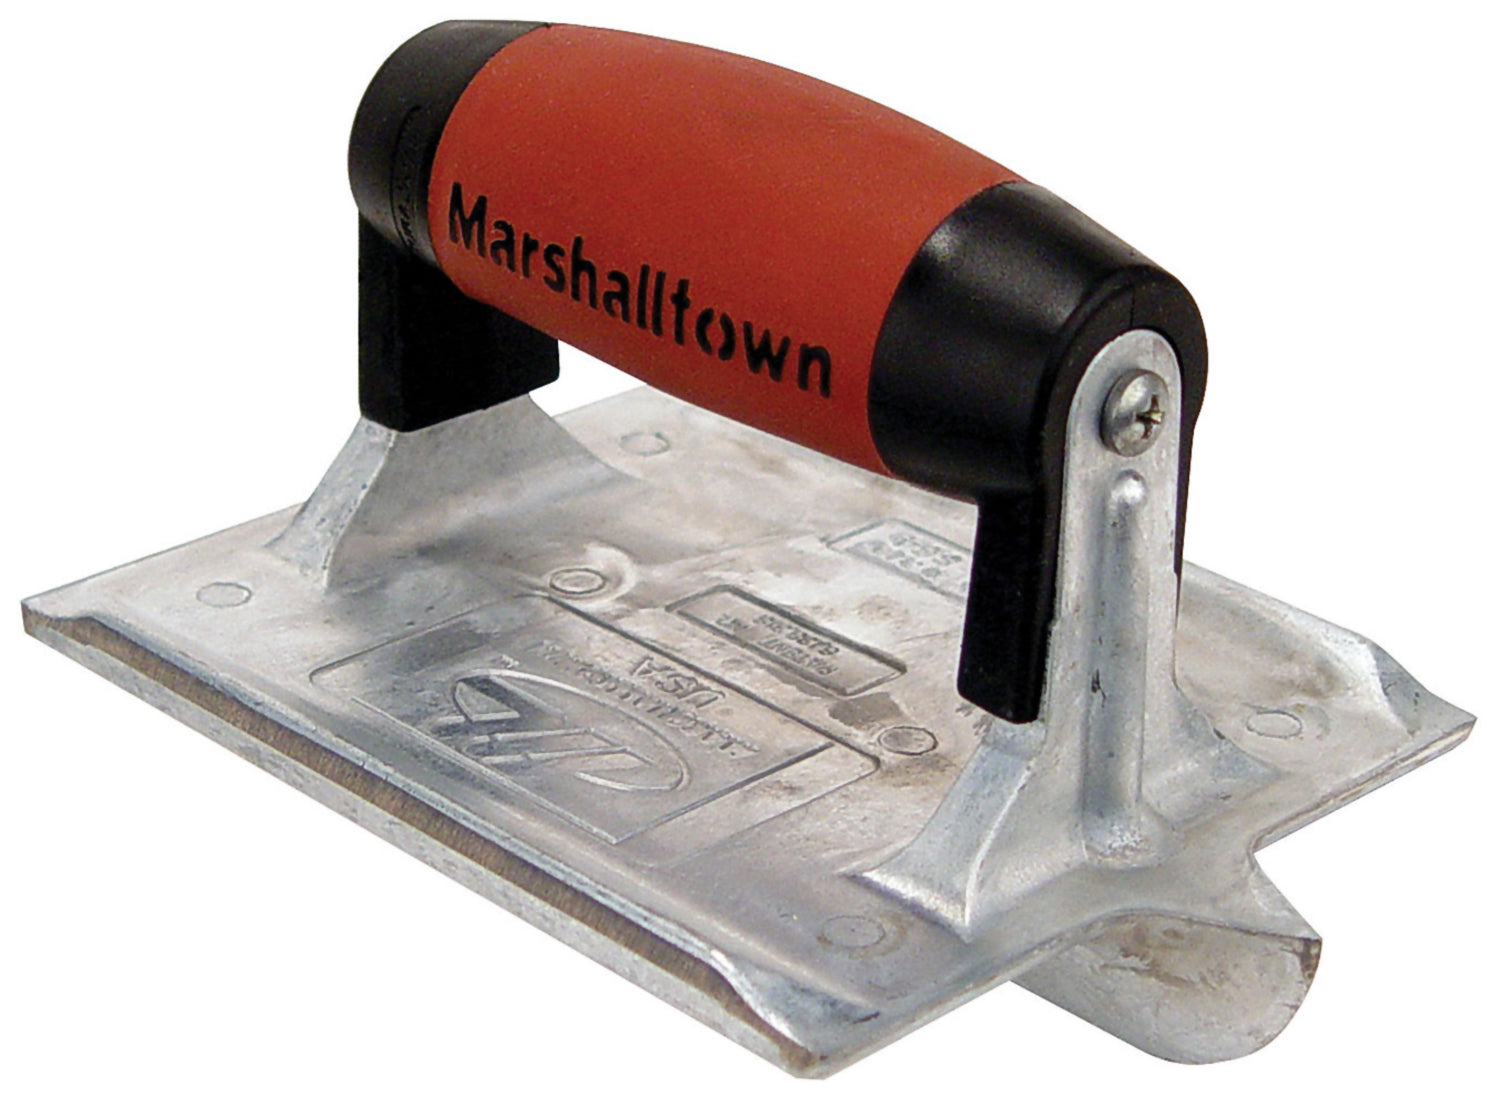 Marshalltown, Marshalltown 864d 4-3/8 X 6 rainureuse manuelle robuste en zinc